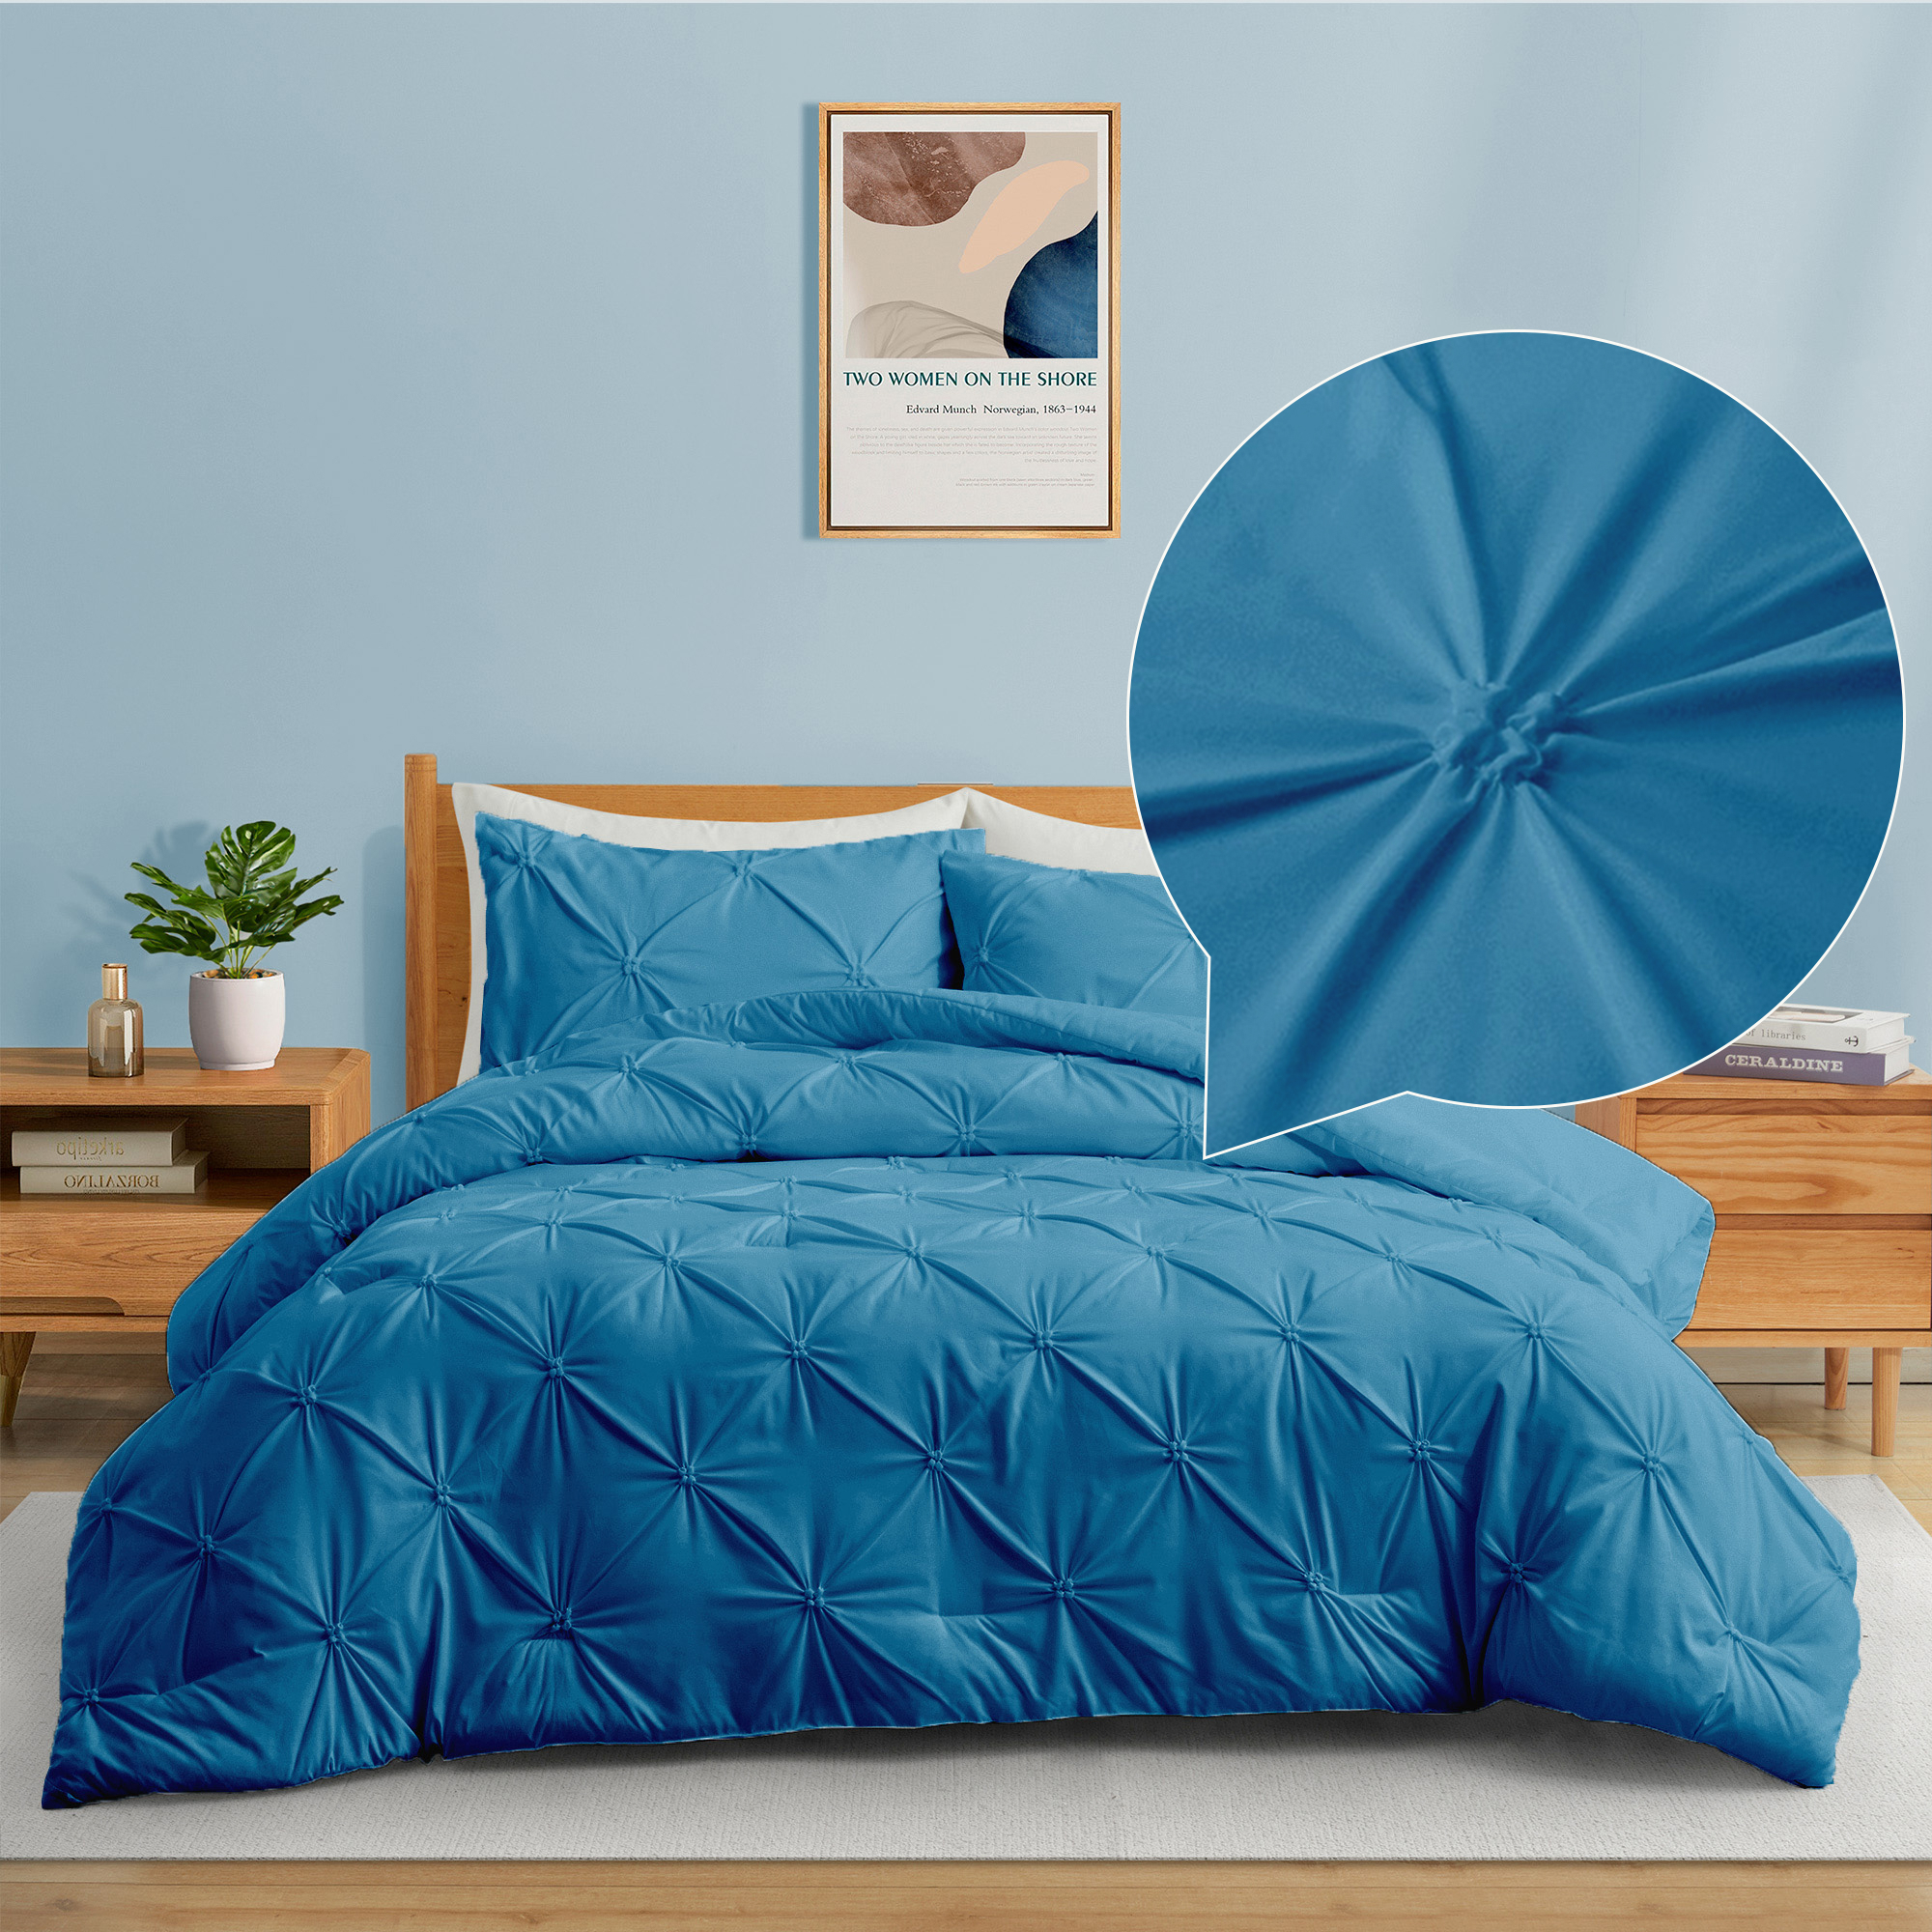 All Seasons Down Alternative Comforter Set, Pinch Pleat Design - Navy Blue, King